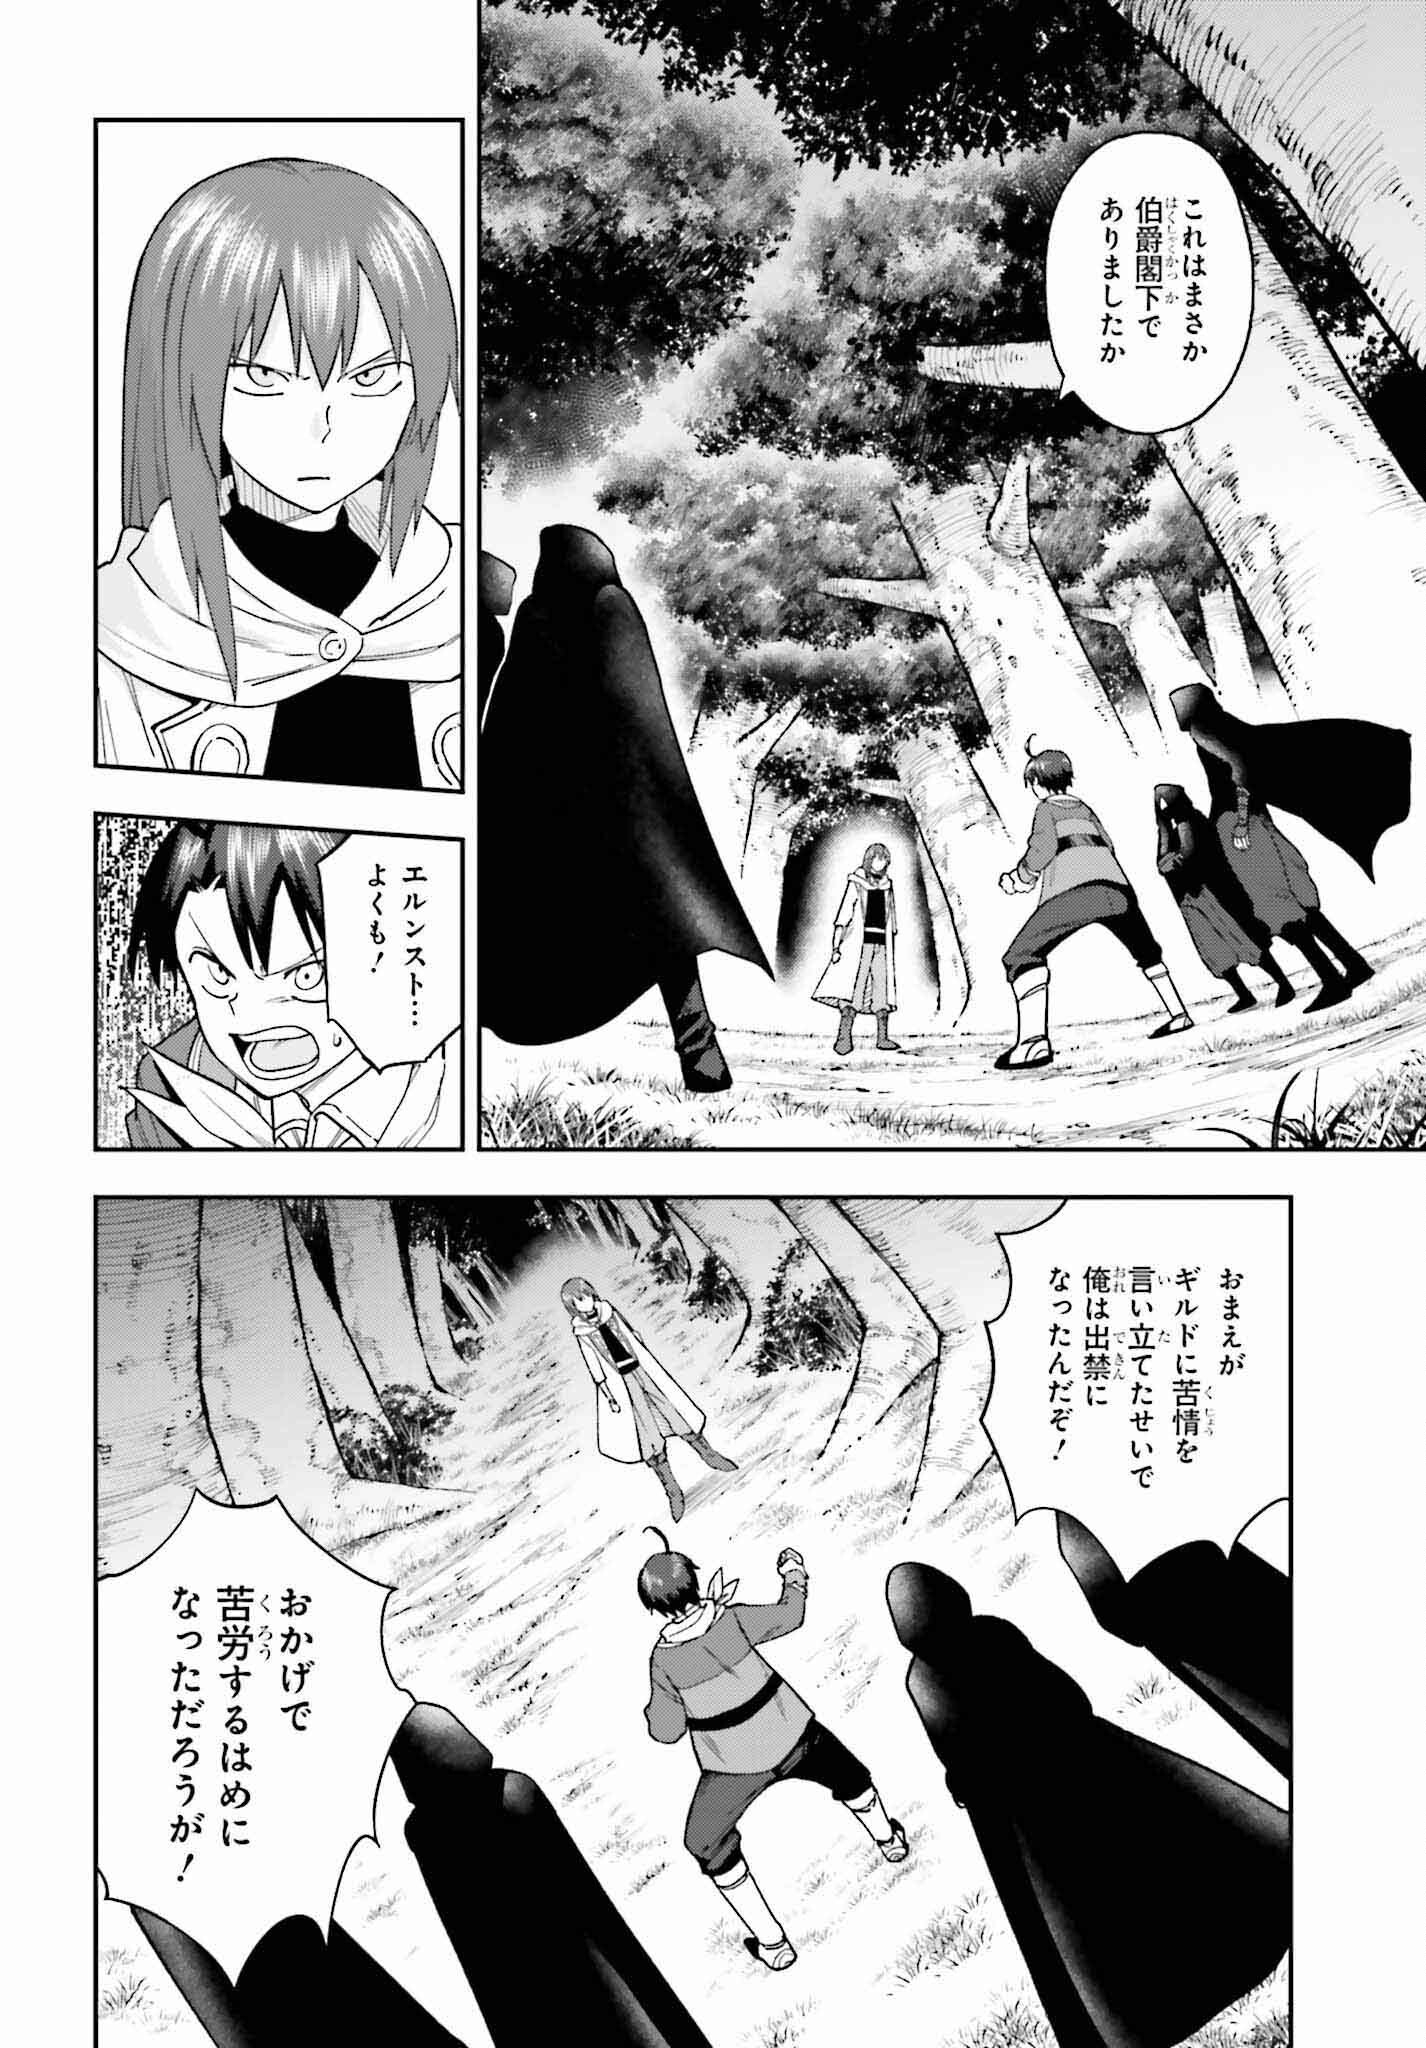 Kami o Kamisama Gacha de Umidashi Houdai - Chapter 14 - Page 2